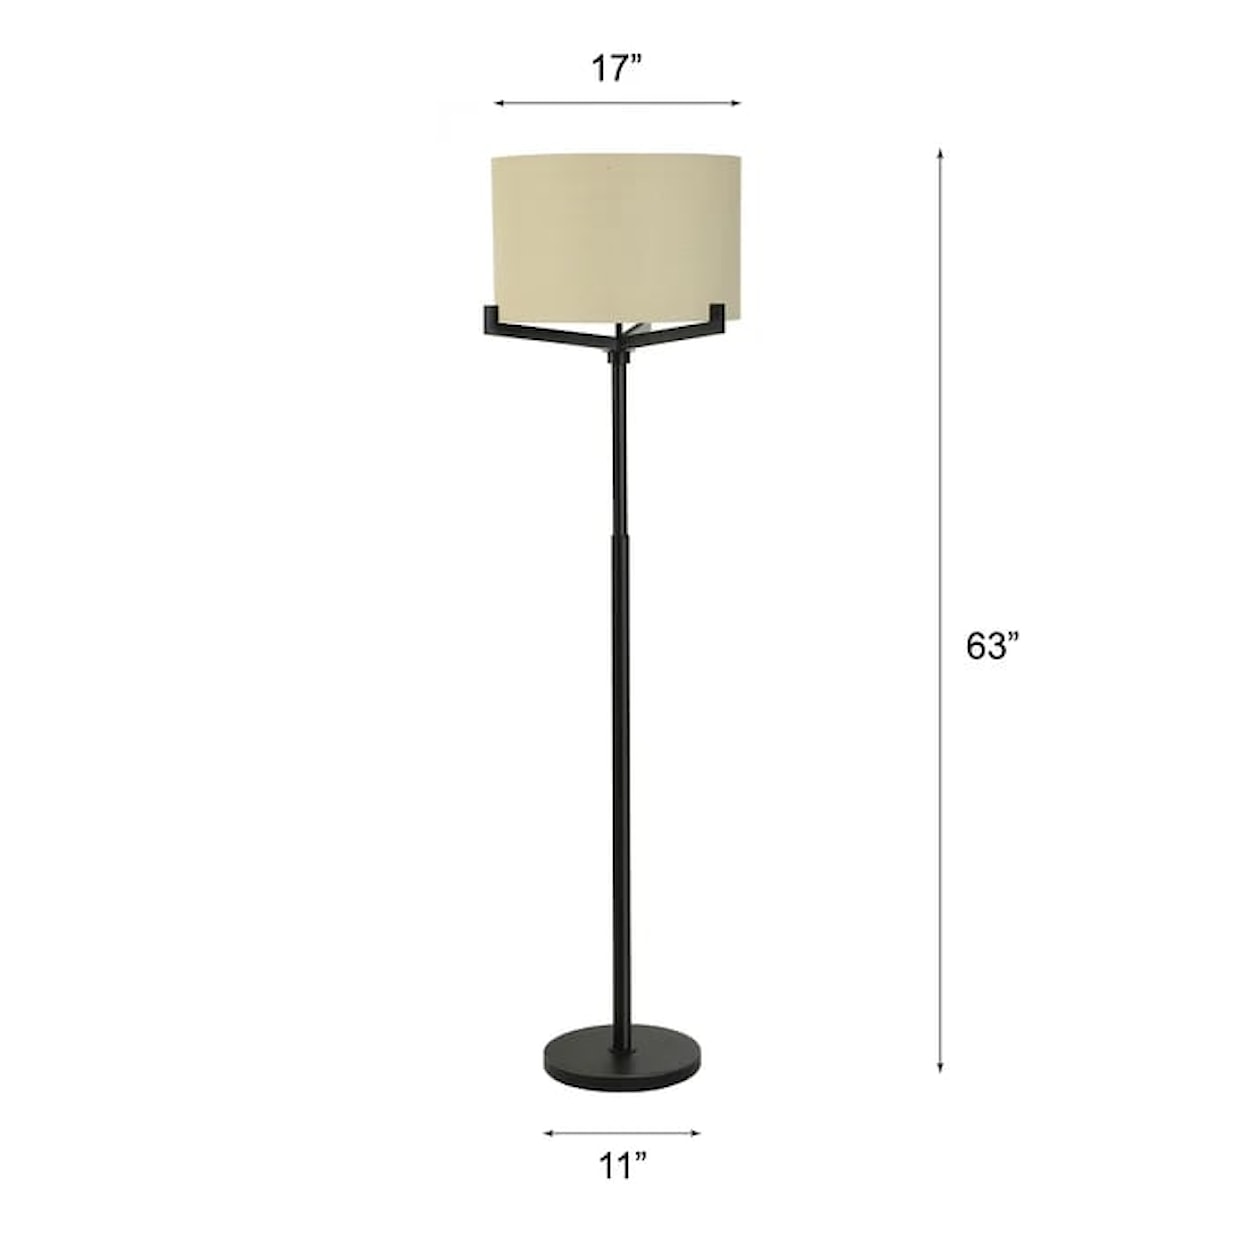 StyleCraft Lamps Brushed Black Industrial Floor Lamp